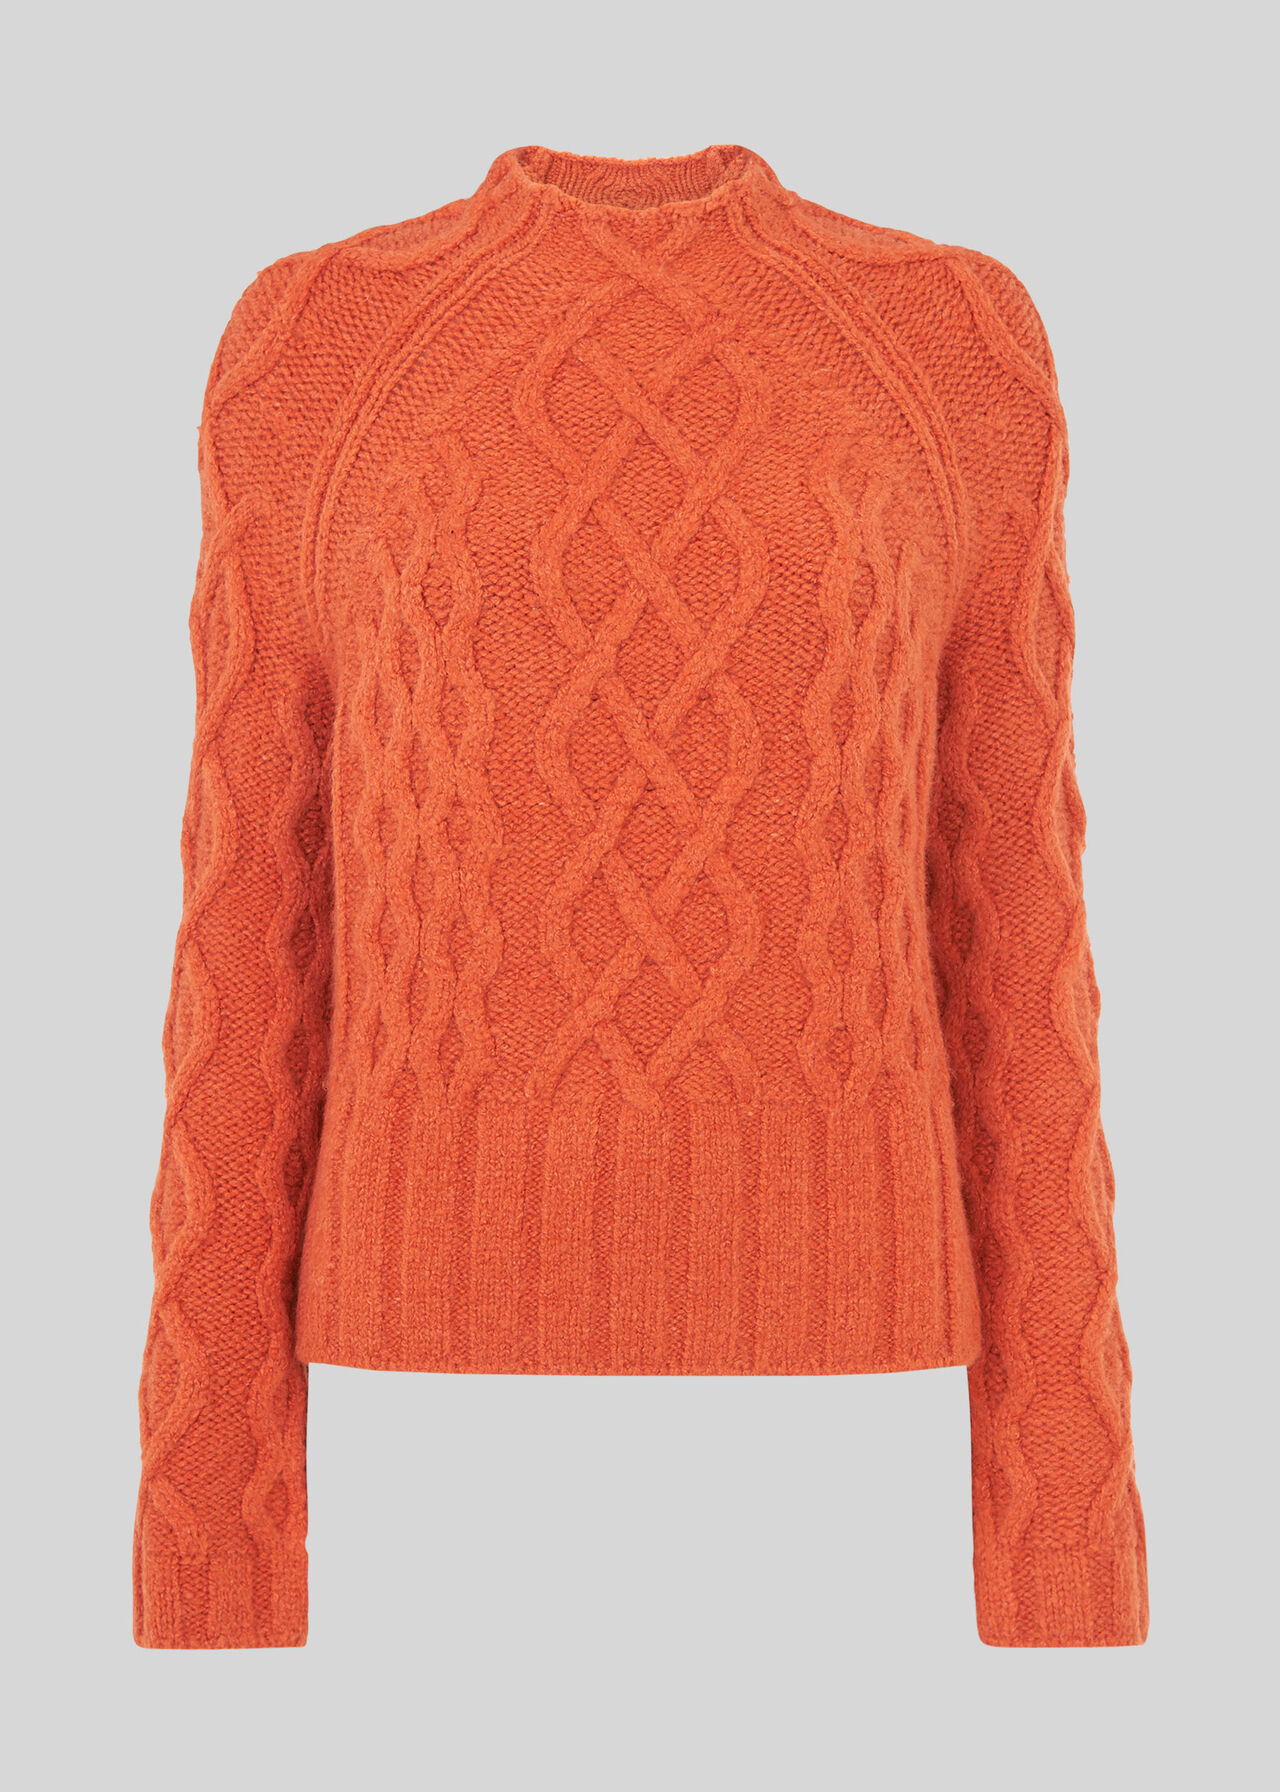 Modern Cable Knit Orange